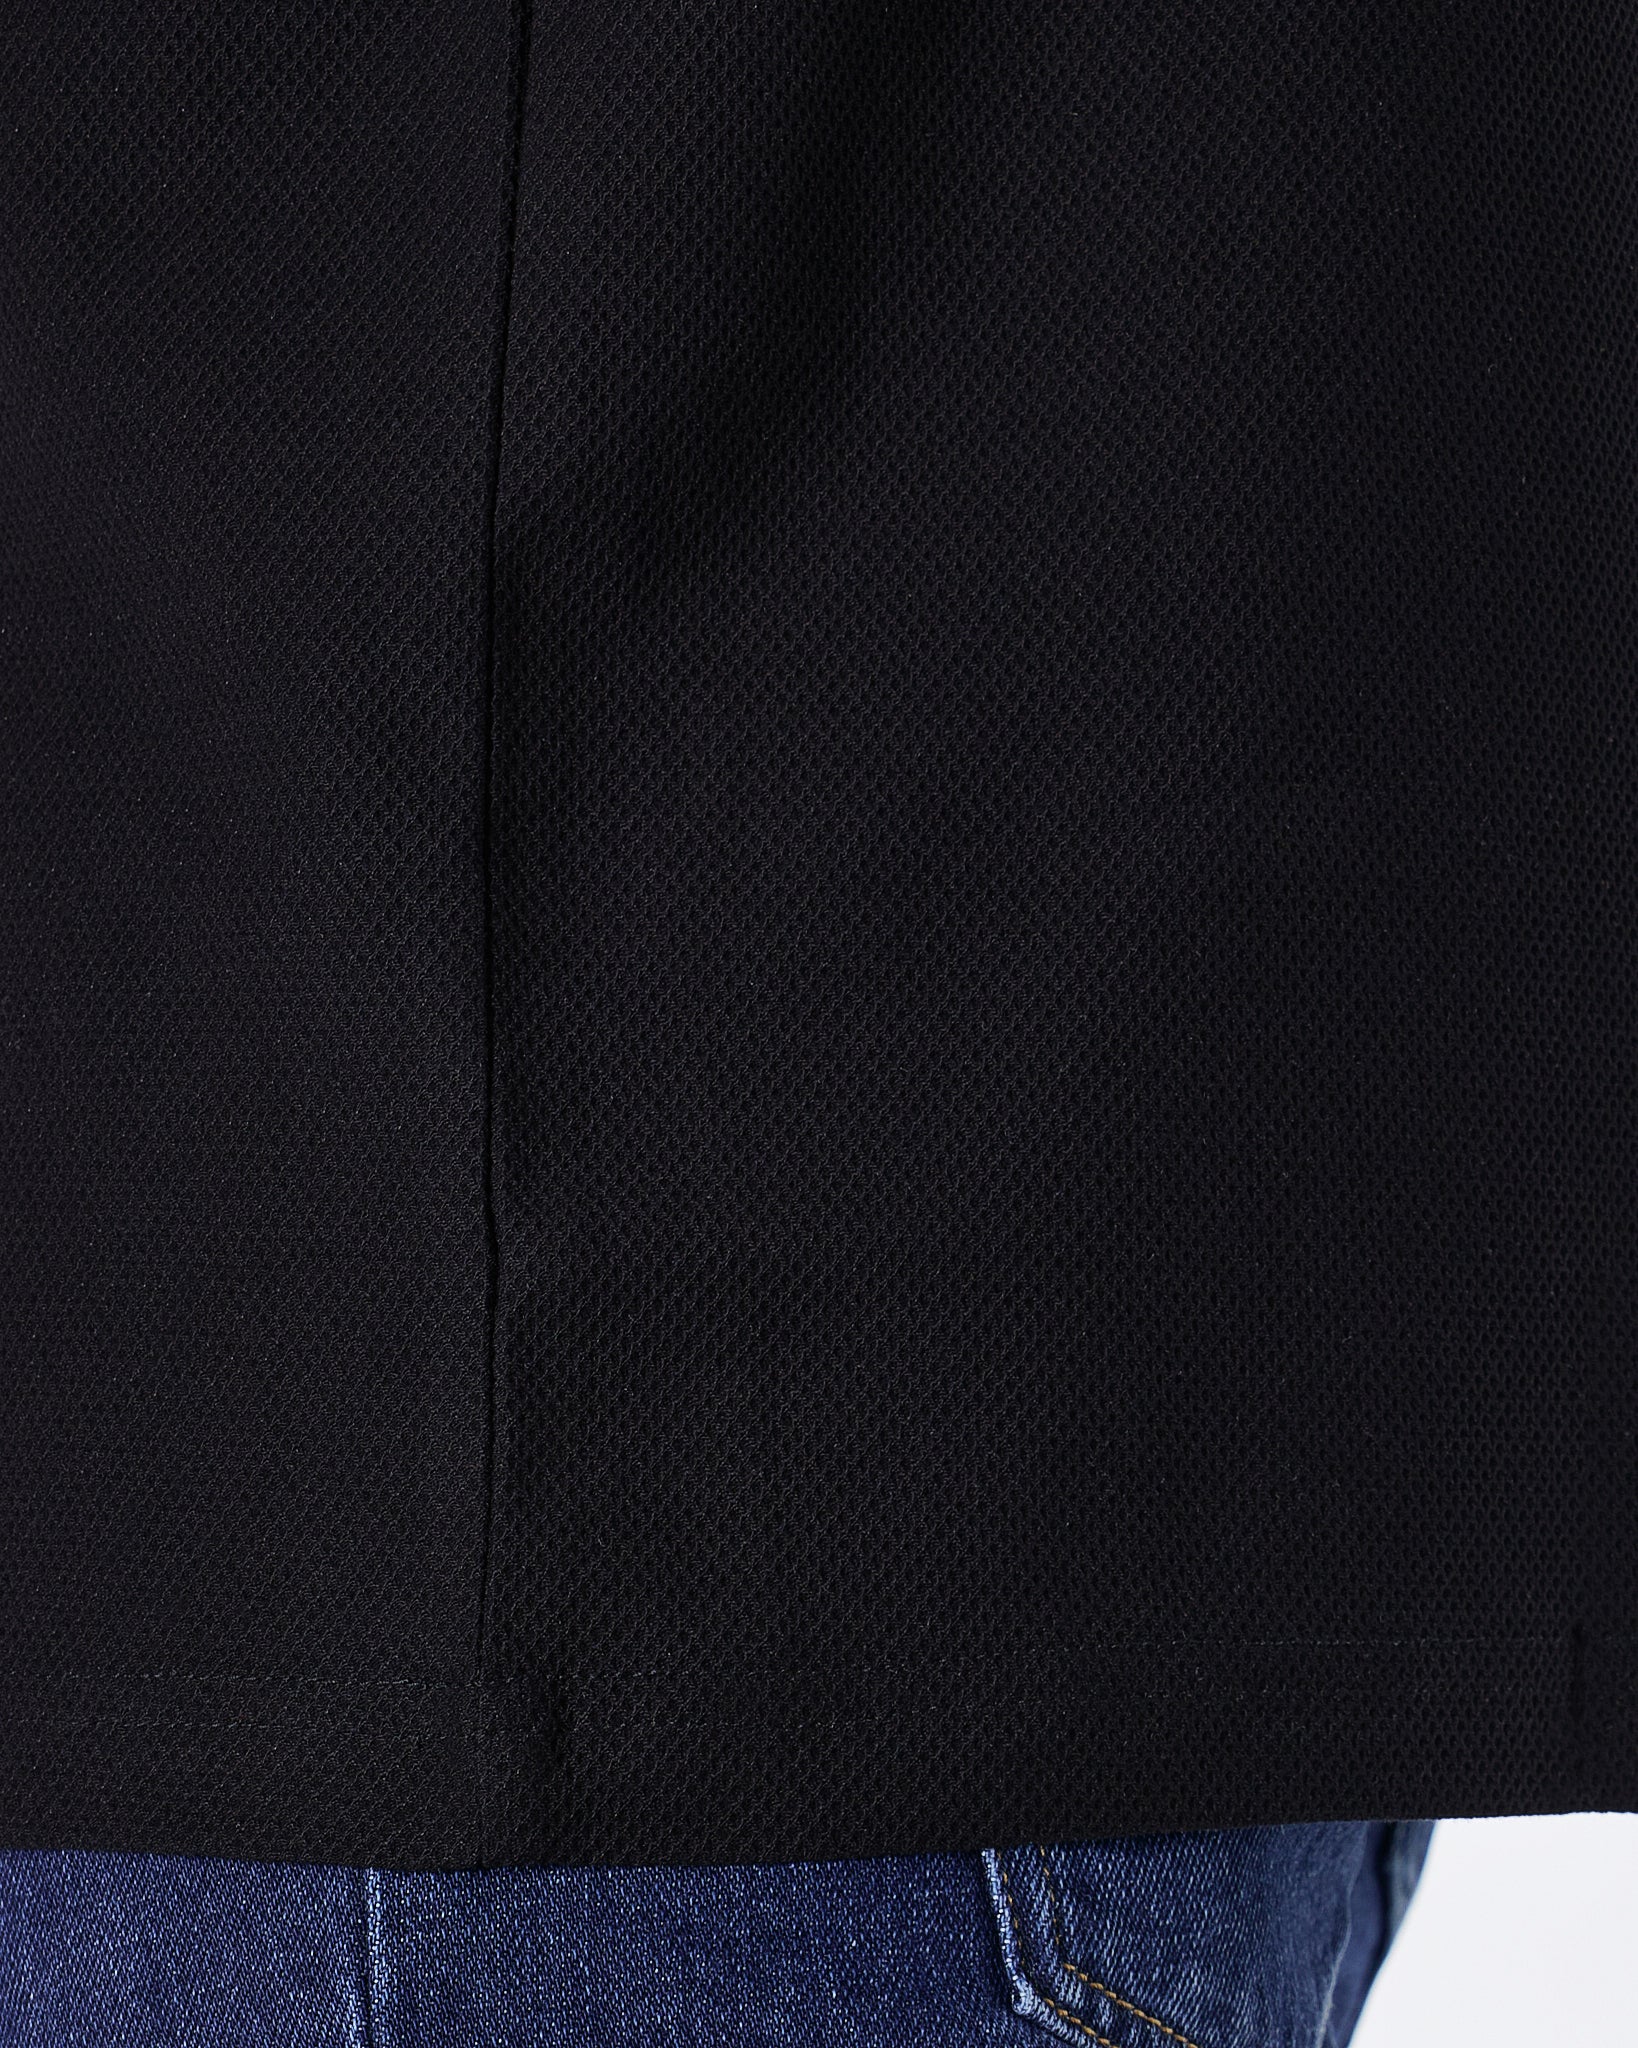 MOI OUTFIT-ABA Solid Color Comfort Men Black T-Shirt 14.90